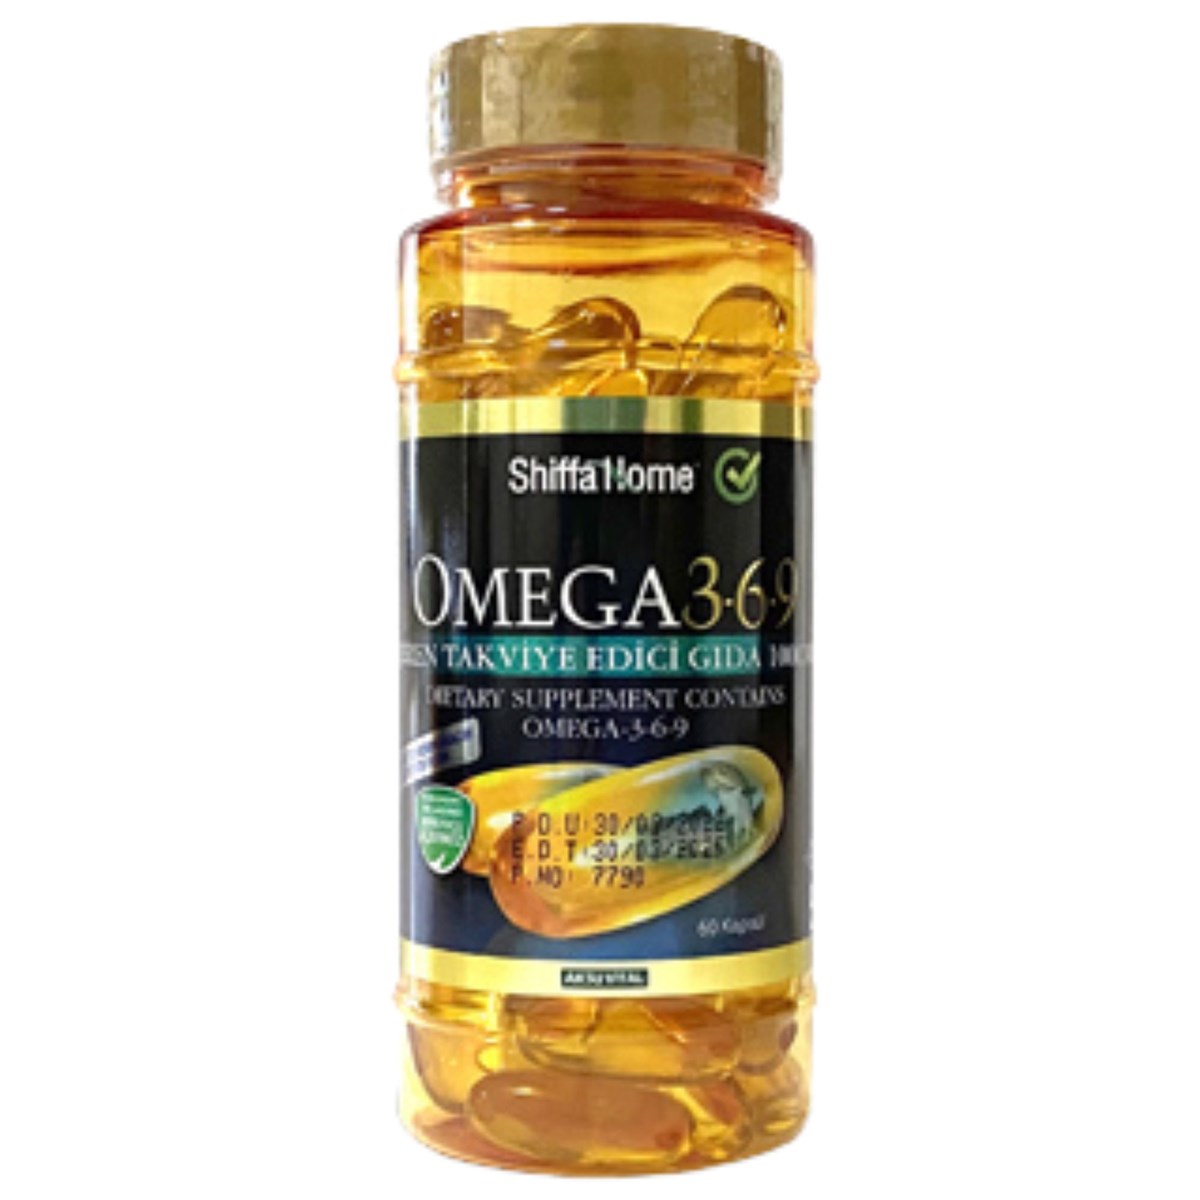 Shiffa Home Omega 3-6-9 Balık Yağı 1000mg 60 Softgel